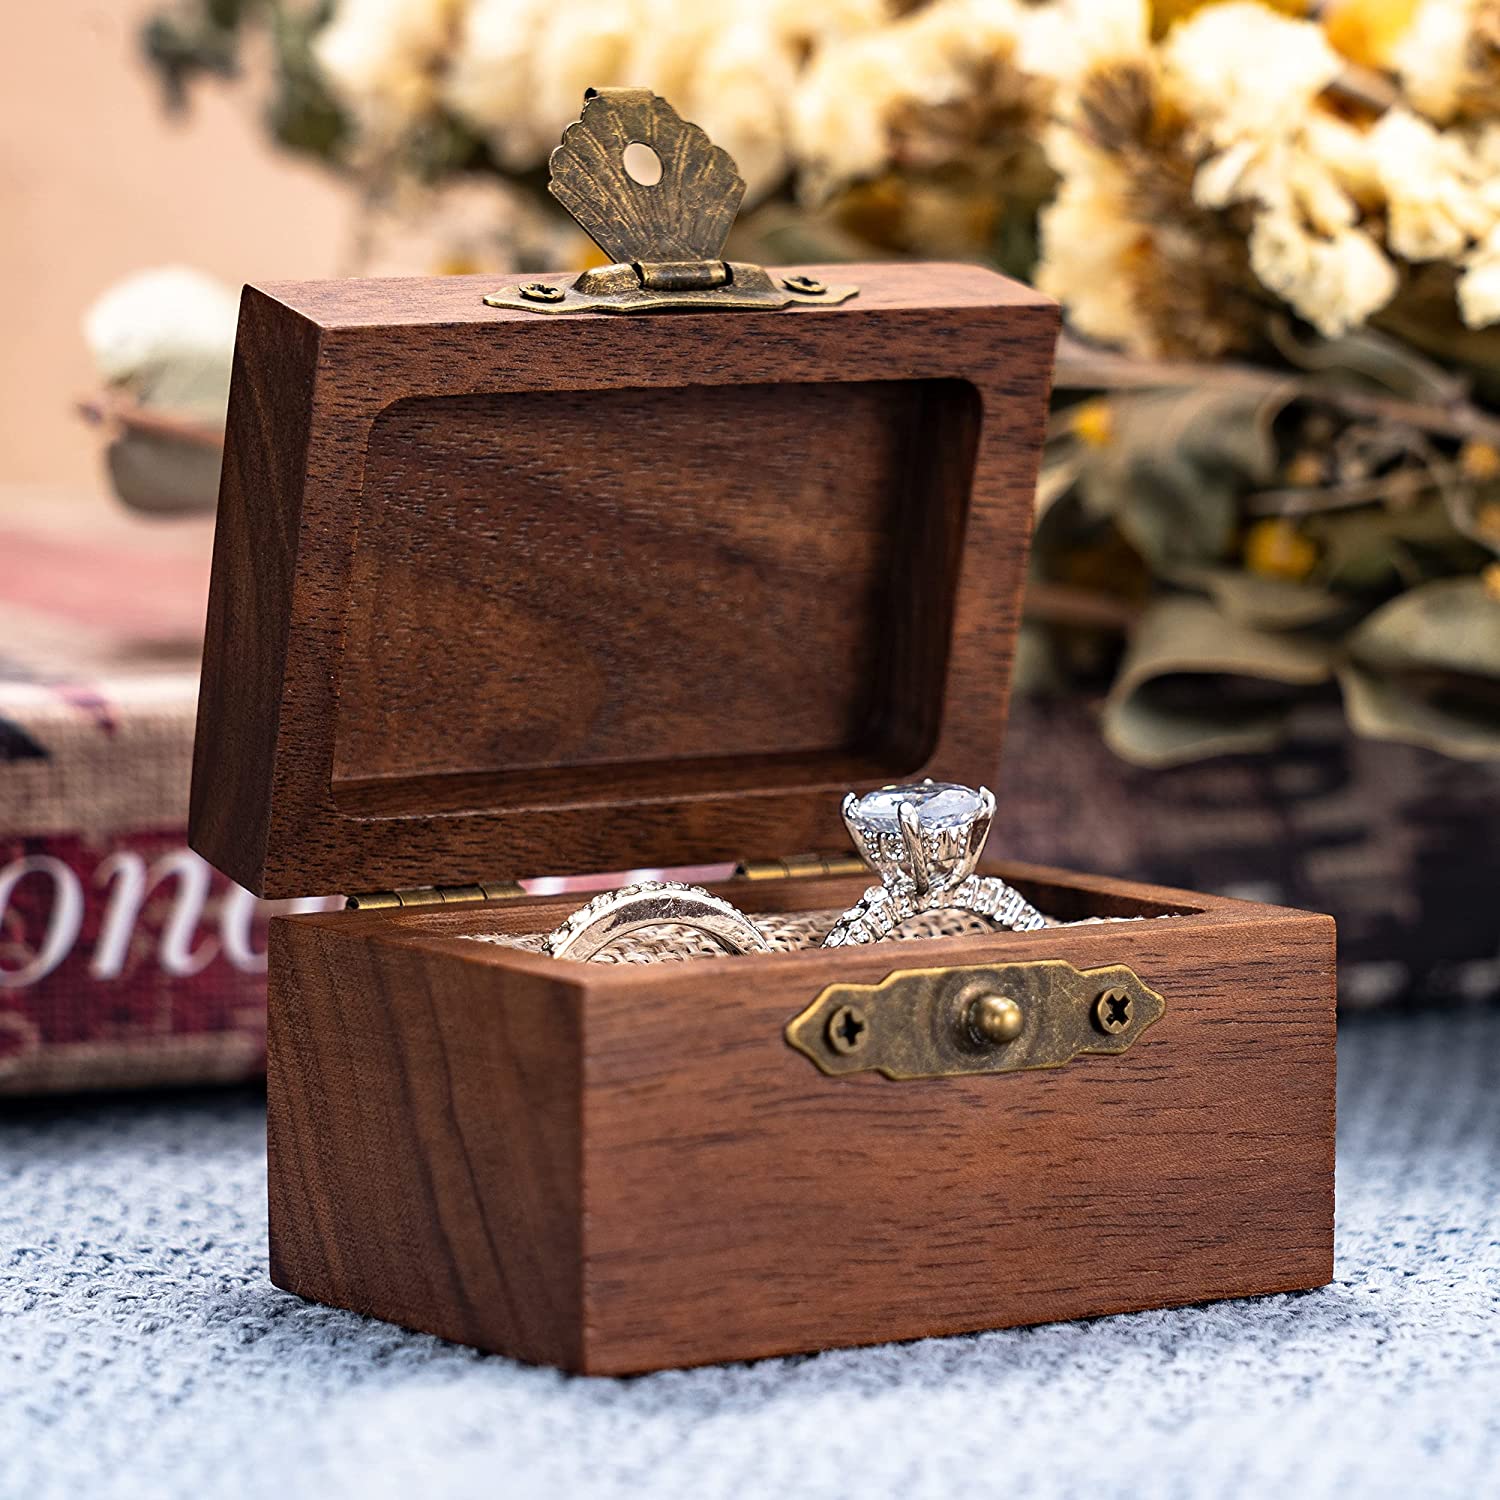 Personalized wooden jewelry box